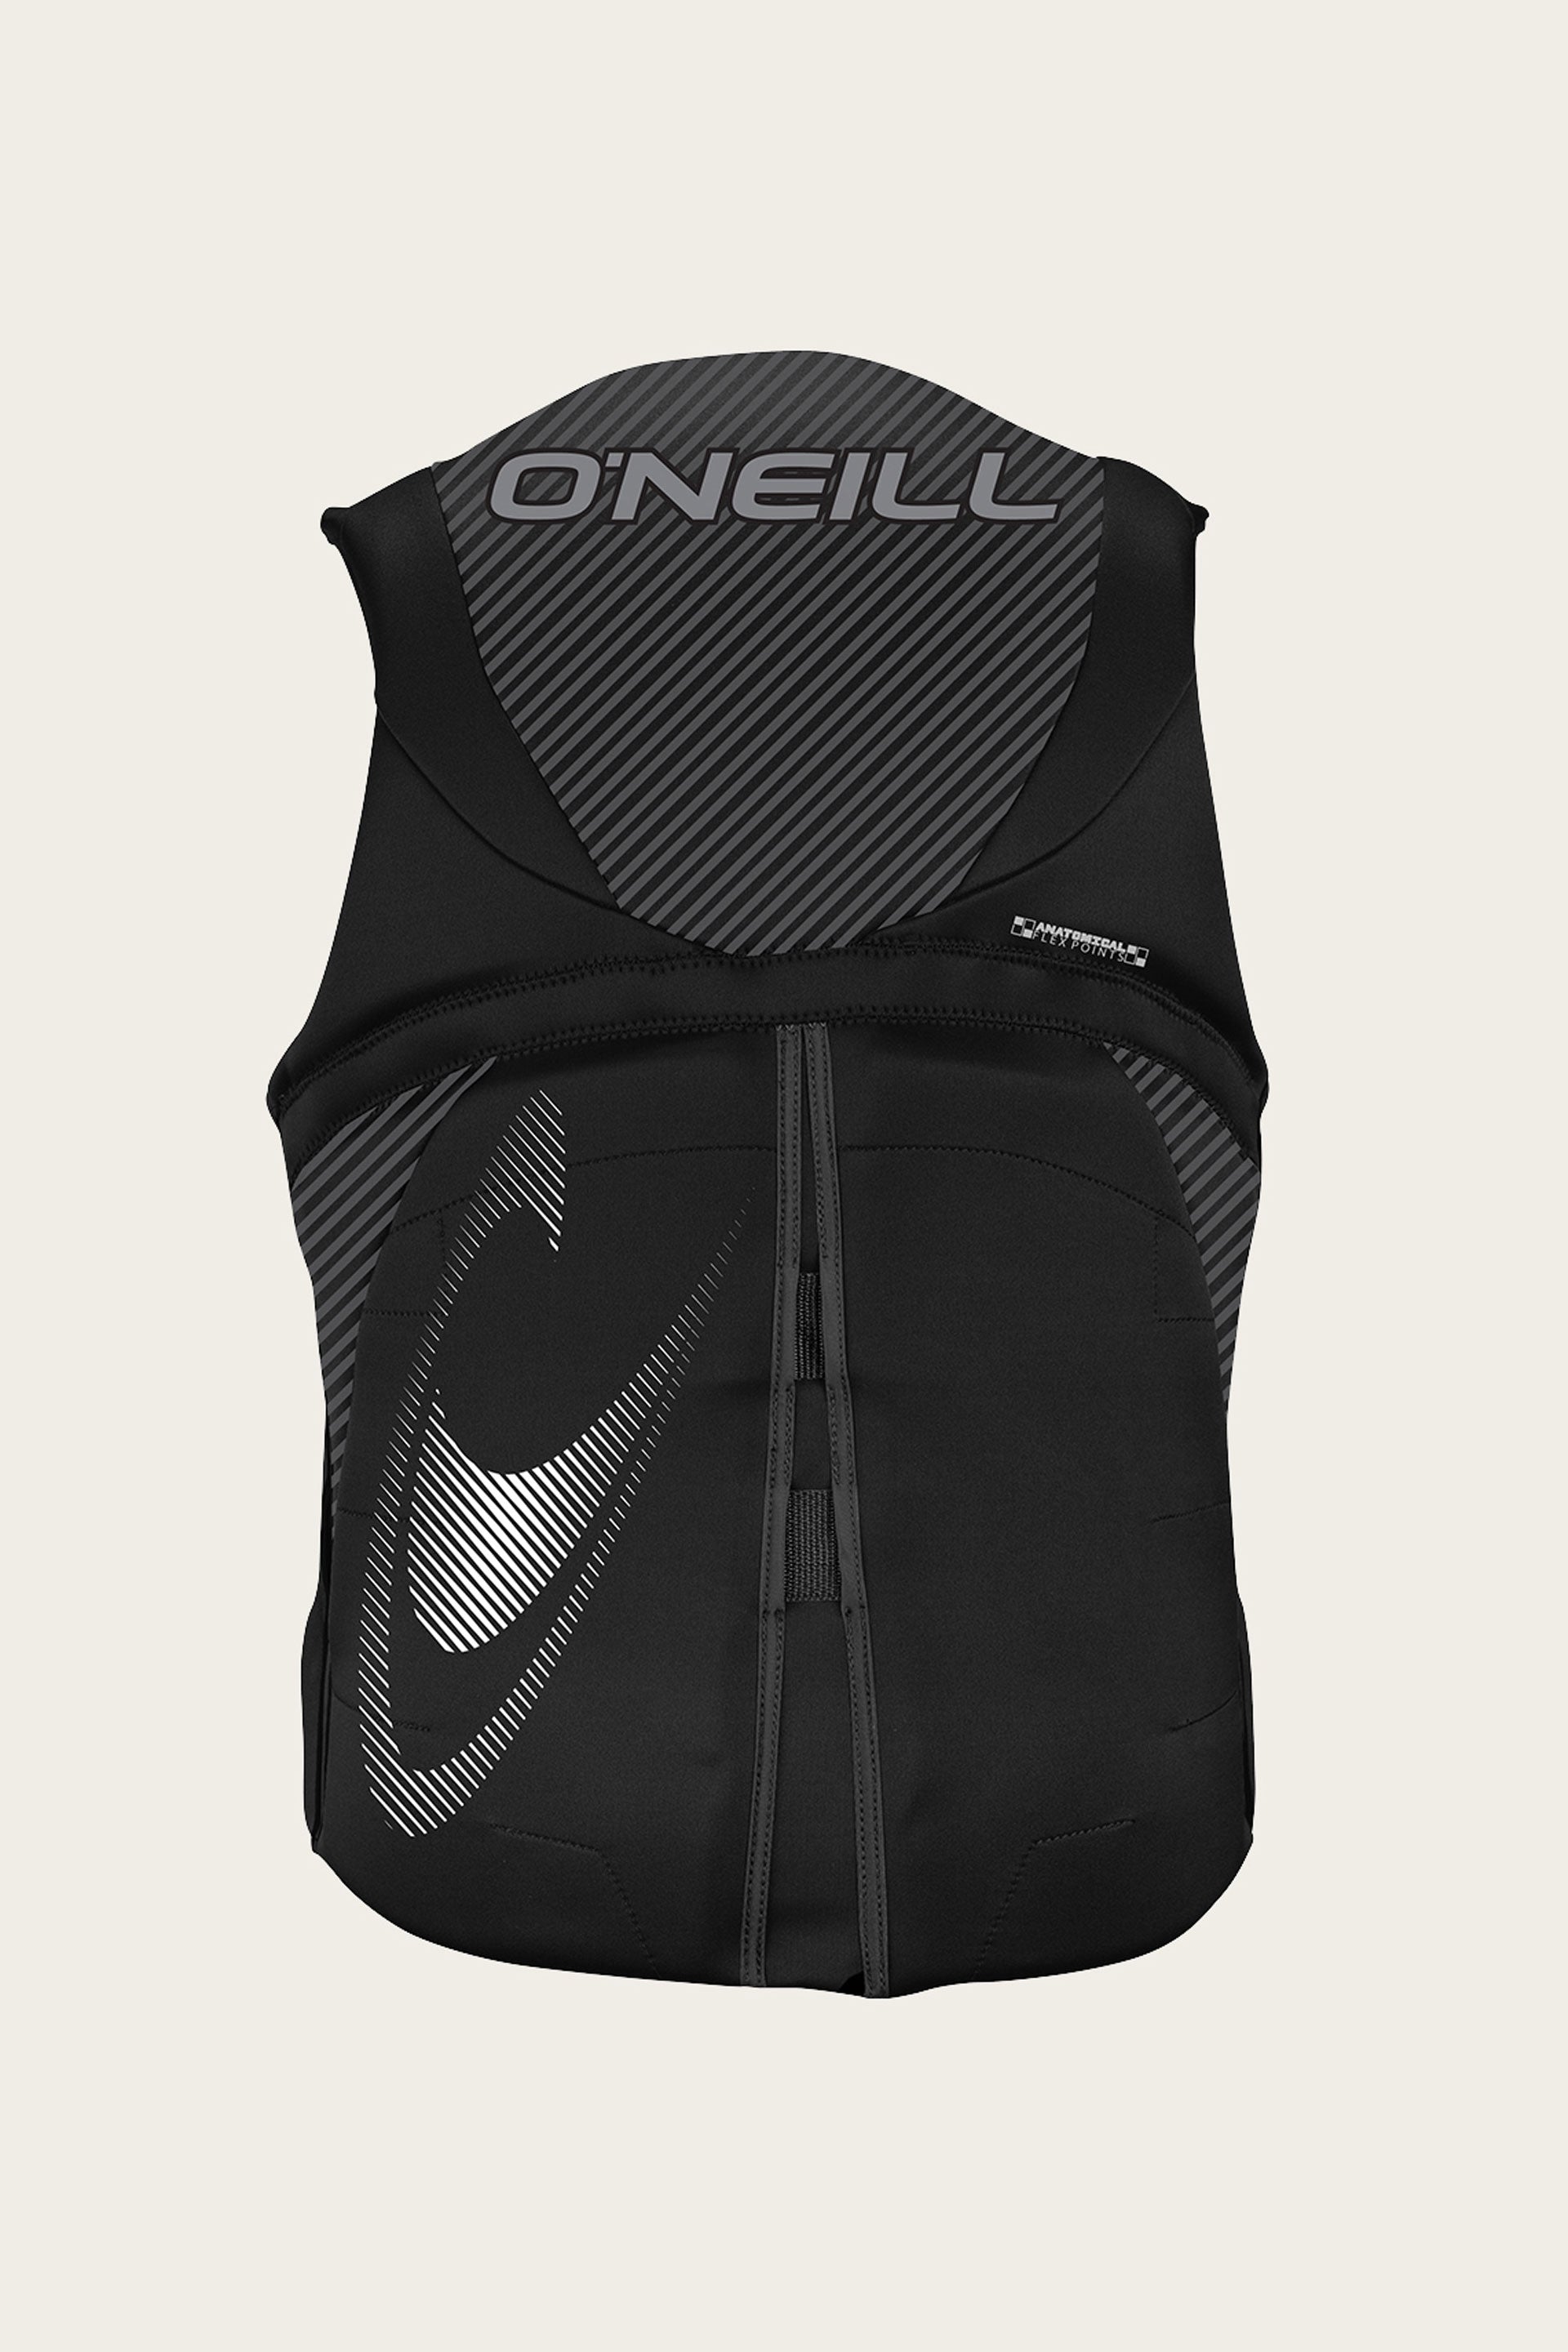 O'neill Men's Reactor Uscg Vest, Black, XL